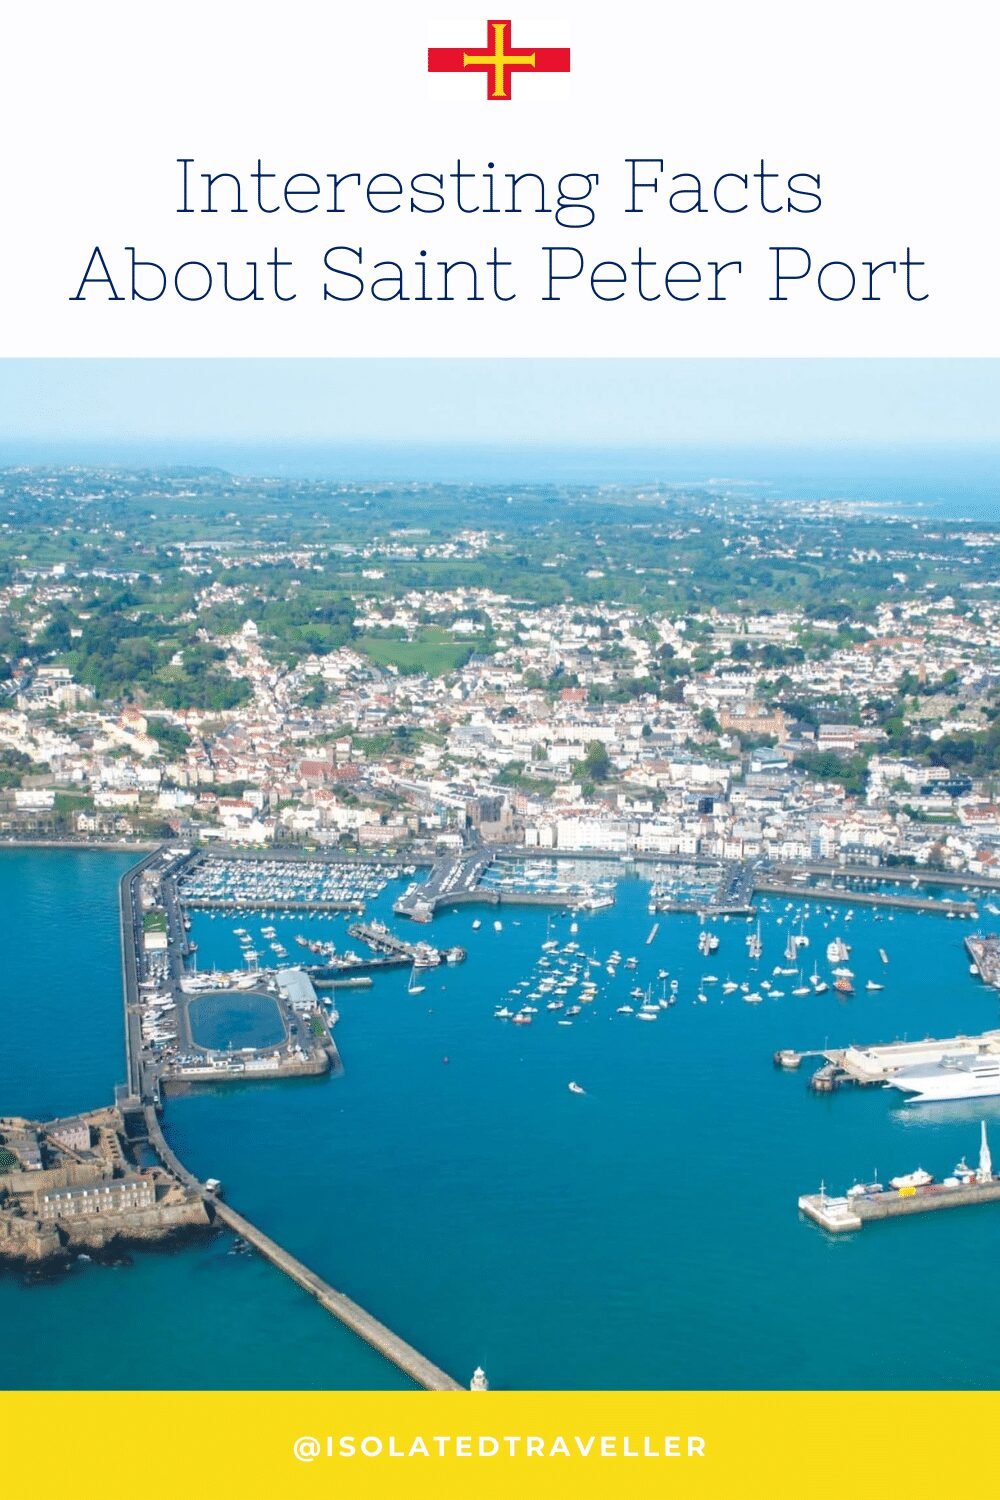 Facts About Saint Peter Port, Guernsey